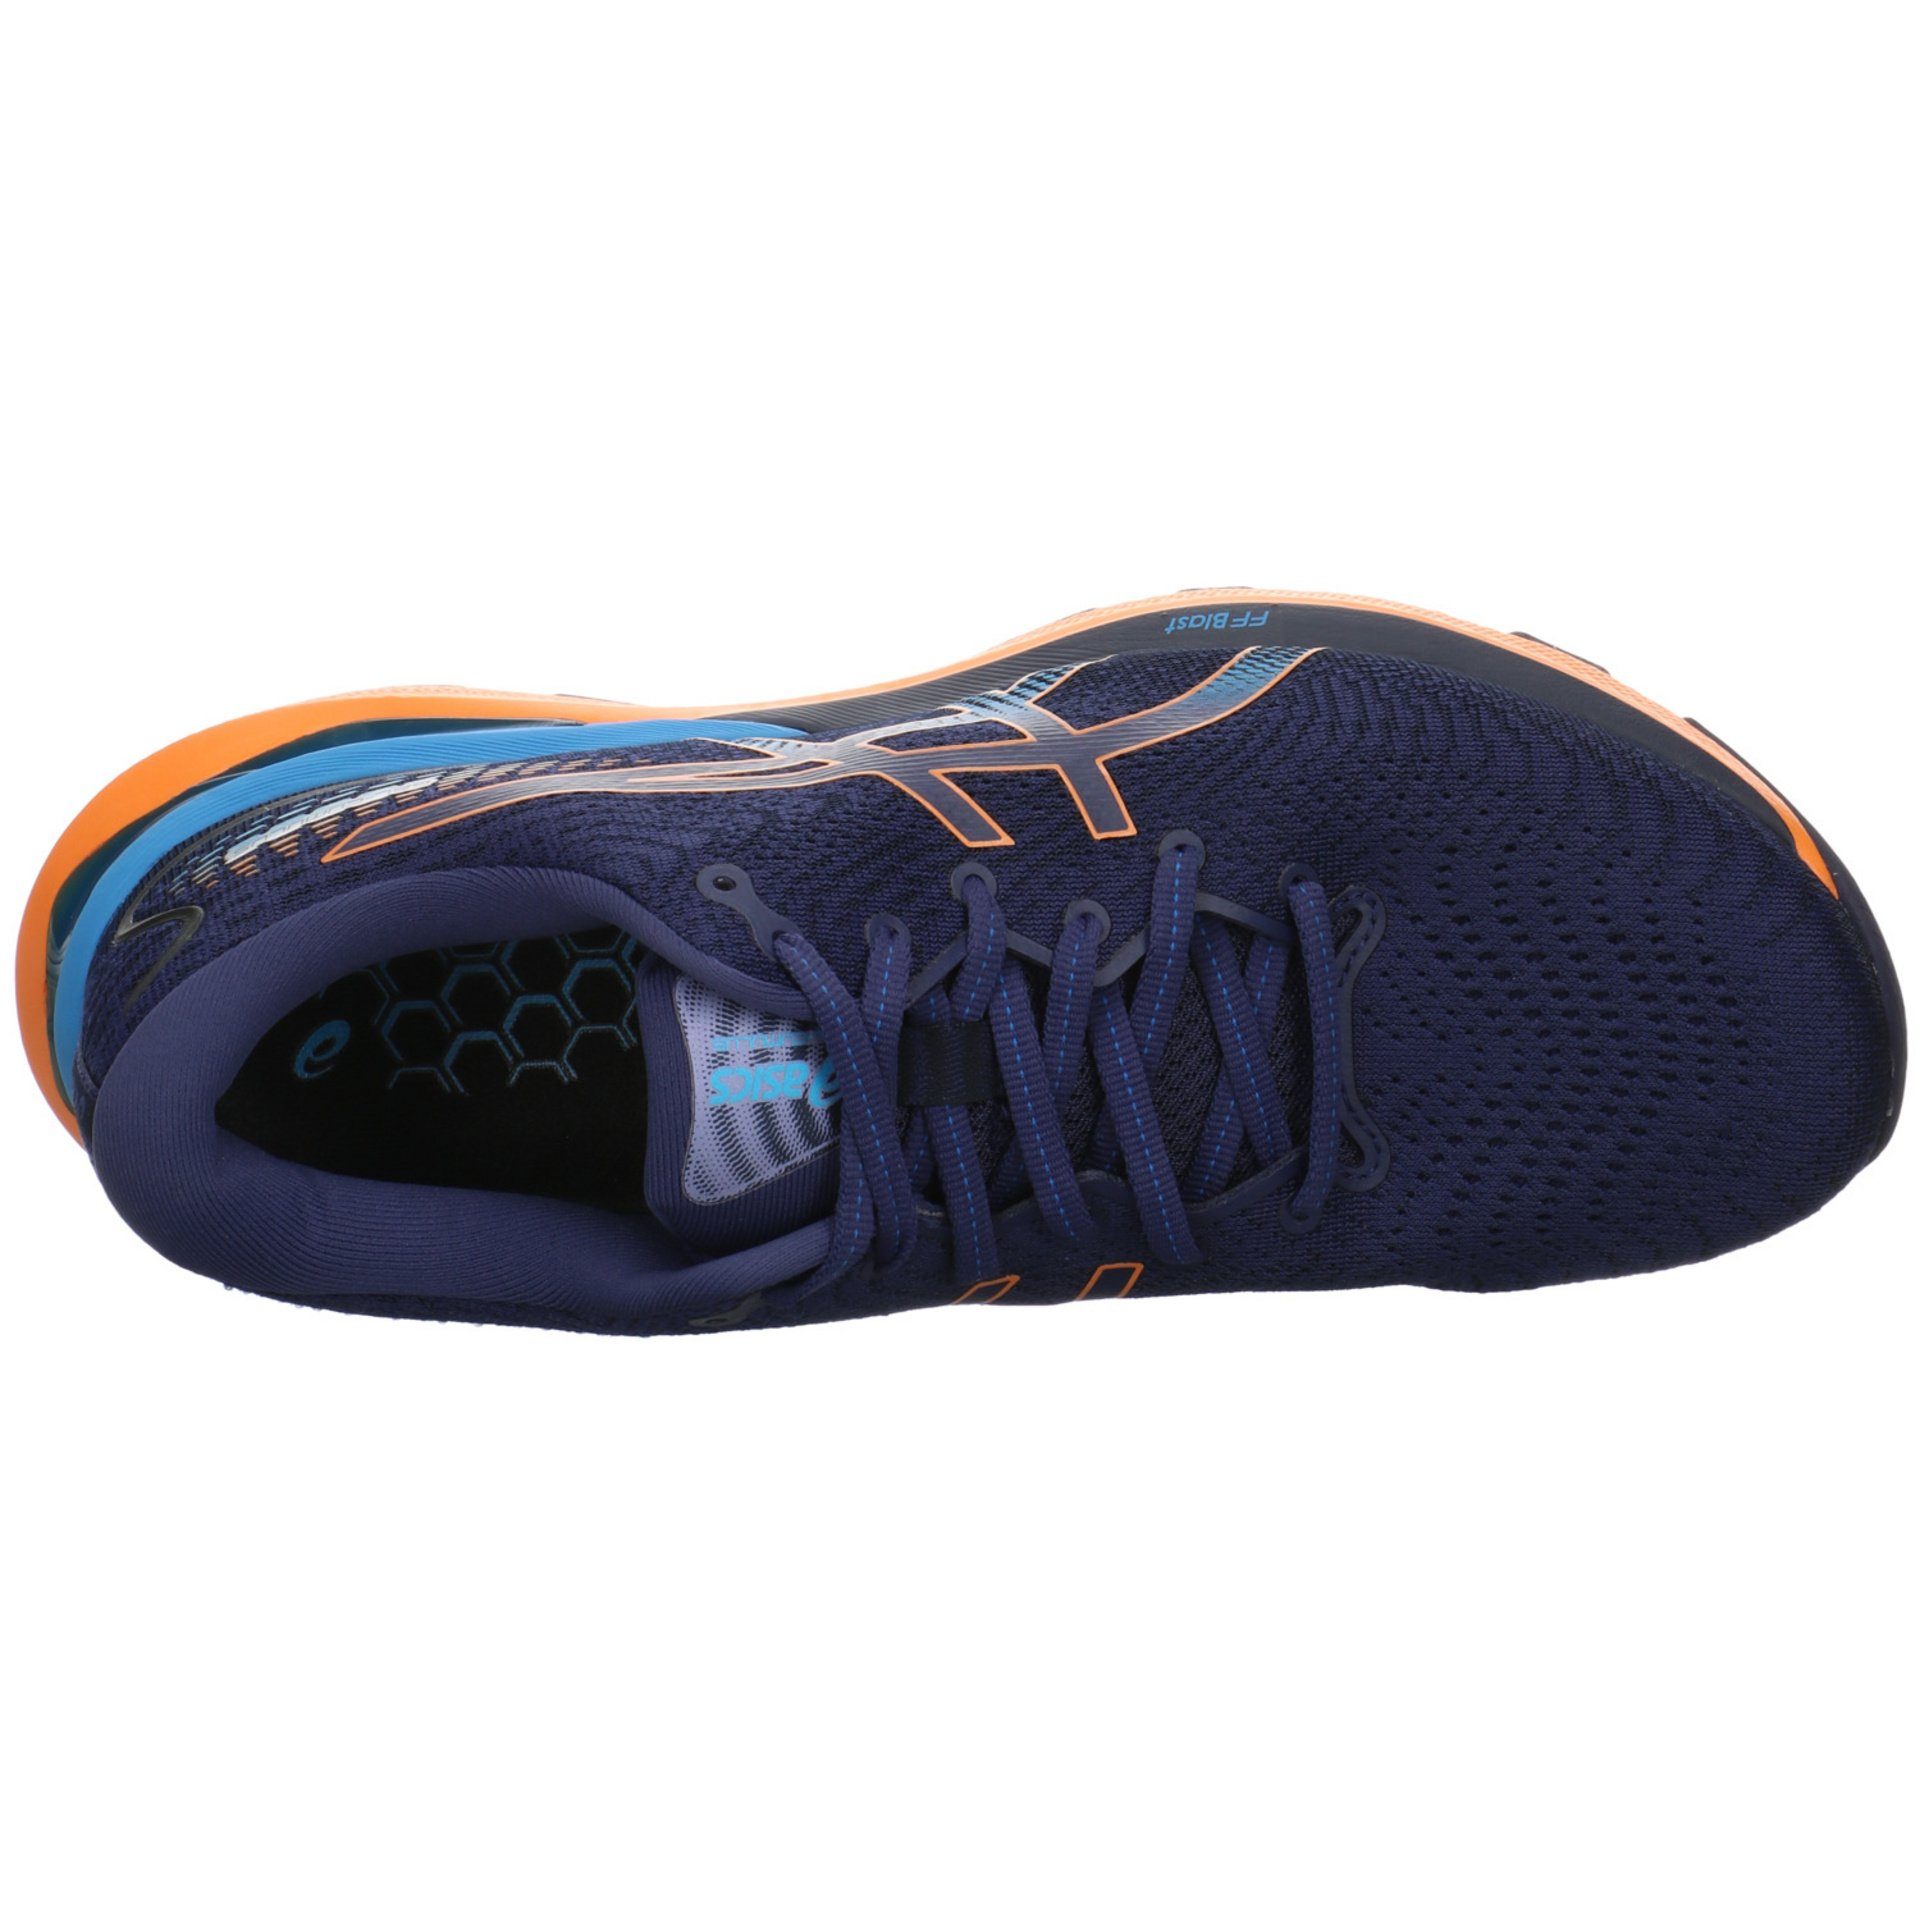 Asics Gel Cumulus Sportschuh BLUE/SUN INDIGO Sneaker Textil Textil uni PEACH